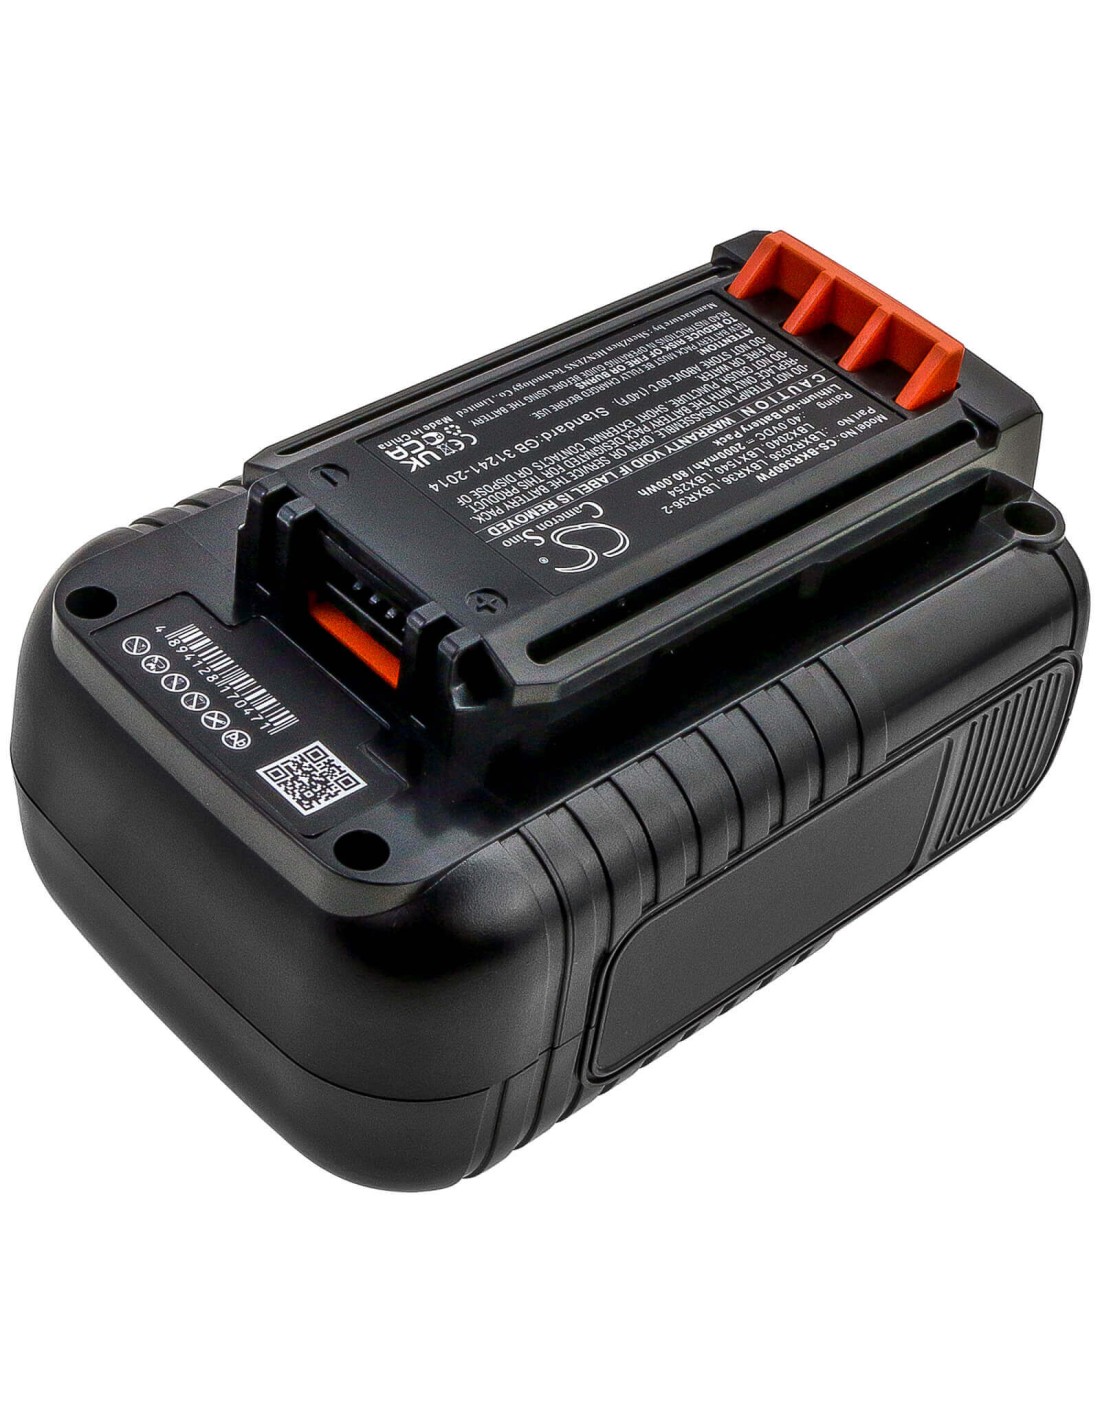 40.0V, Li-ion, 2000mAh, Battery fits Black & Decker, Cm1640, Cm2040, Cm2043c, 80.00Wh